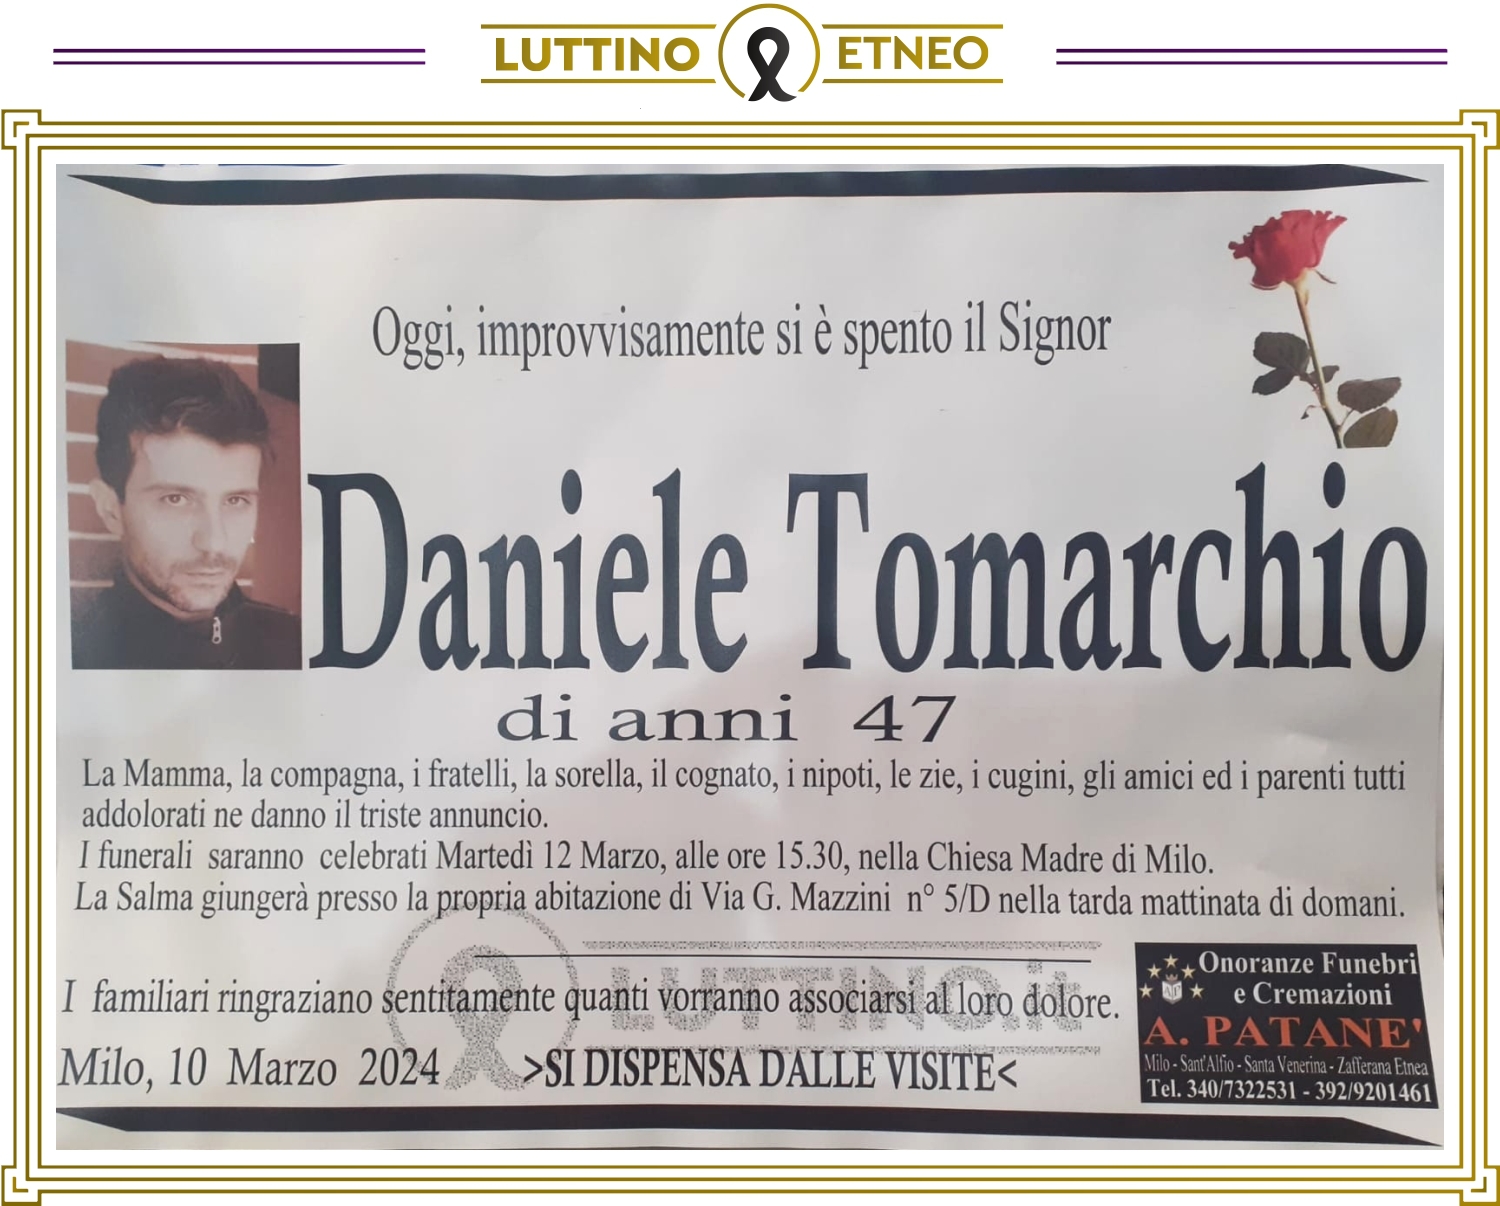 Daniele Tomarchio